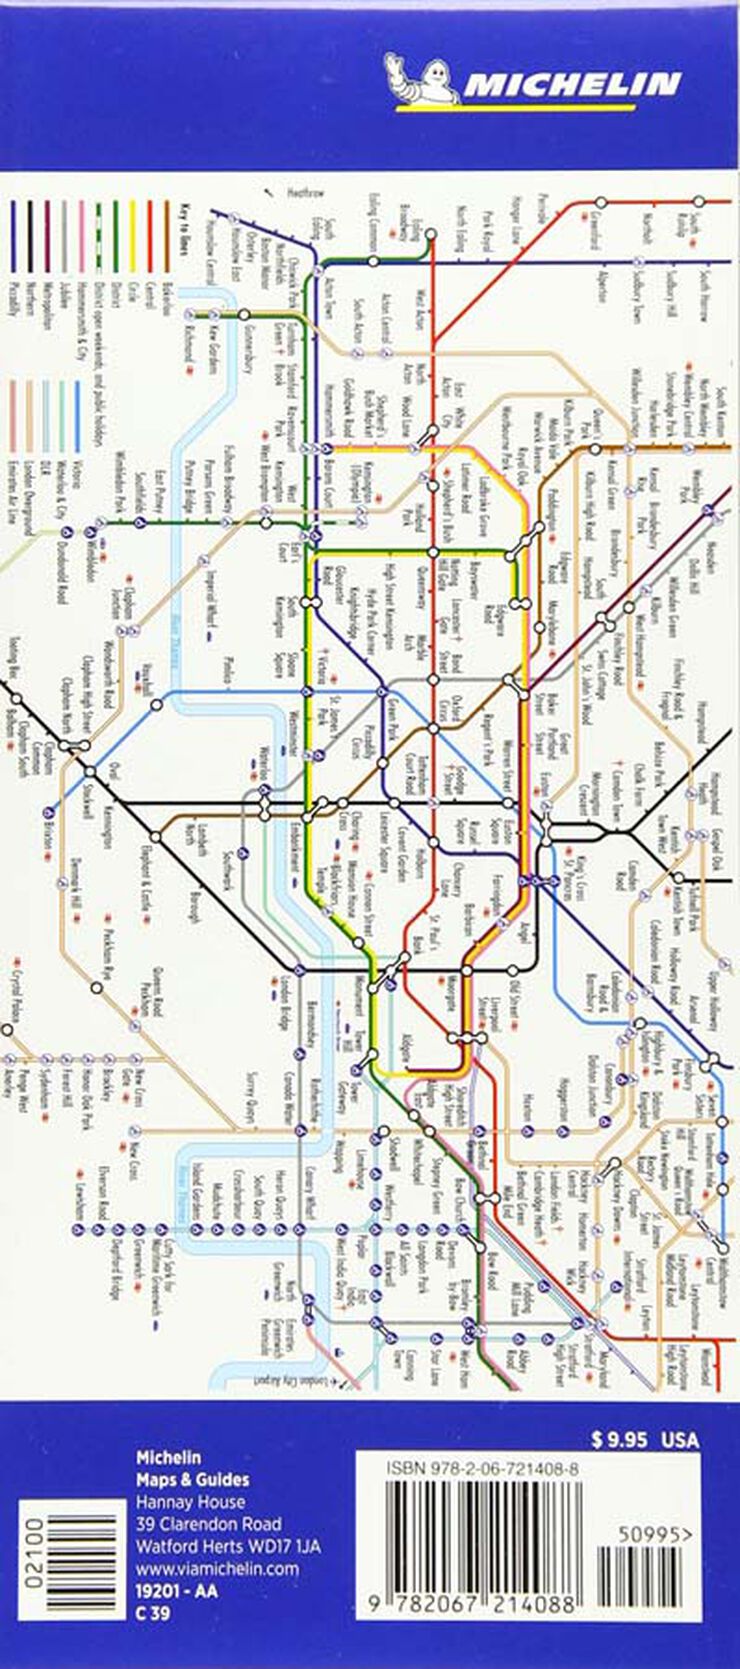 Michelin London city map laminated